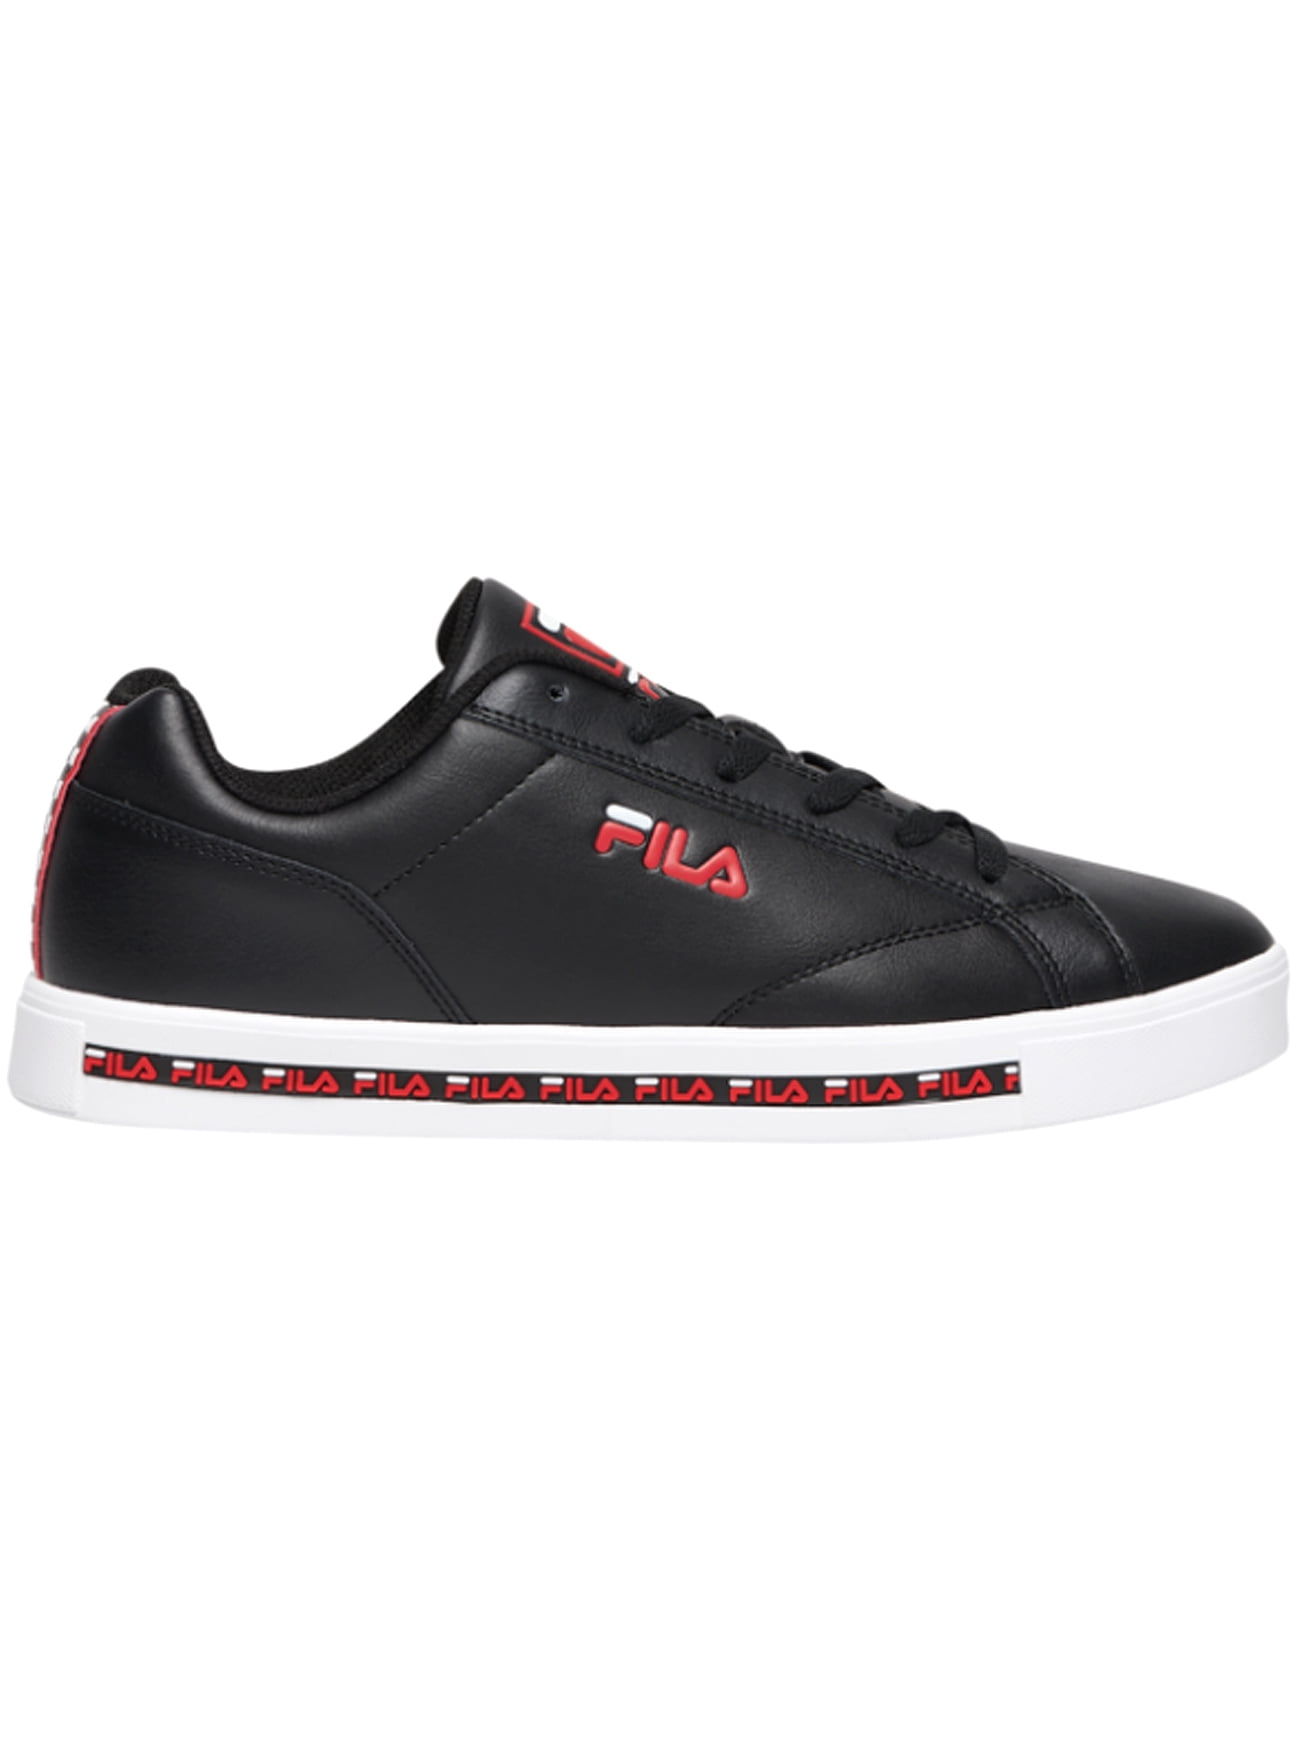 Fila Original Court Mens Low Top Fashion Sneakers Black - Walmart.com